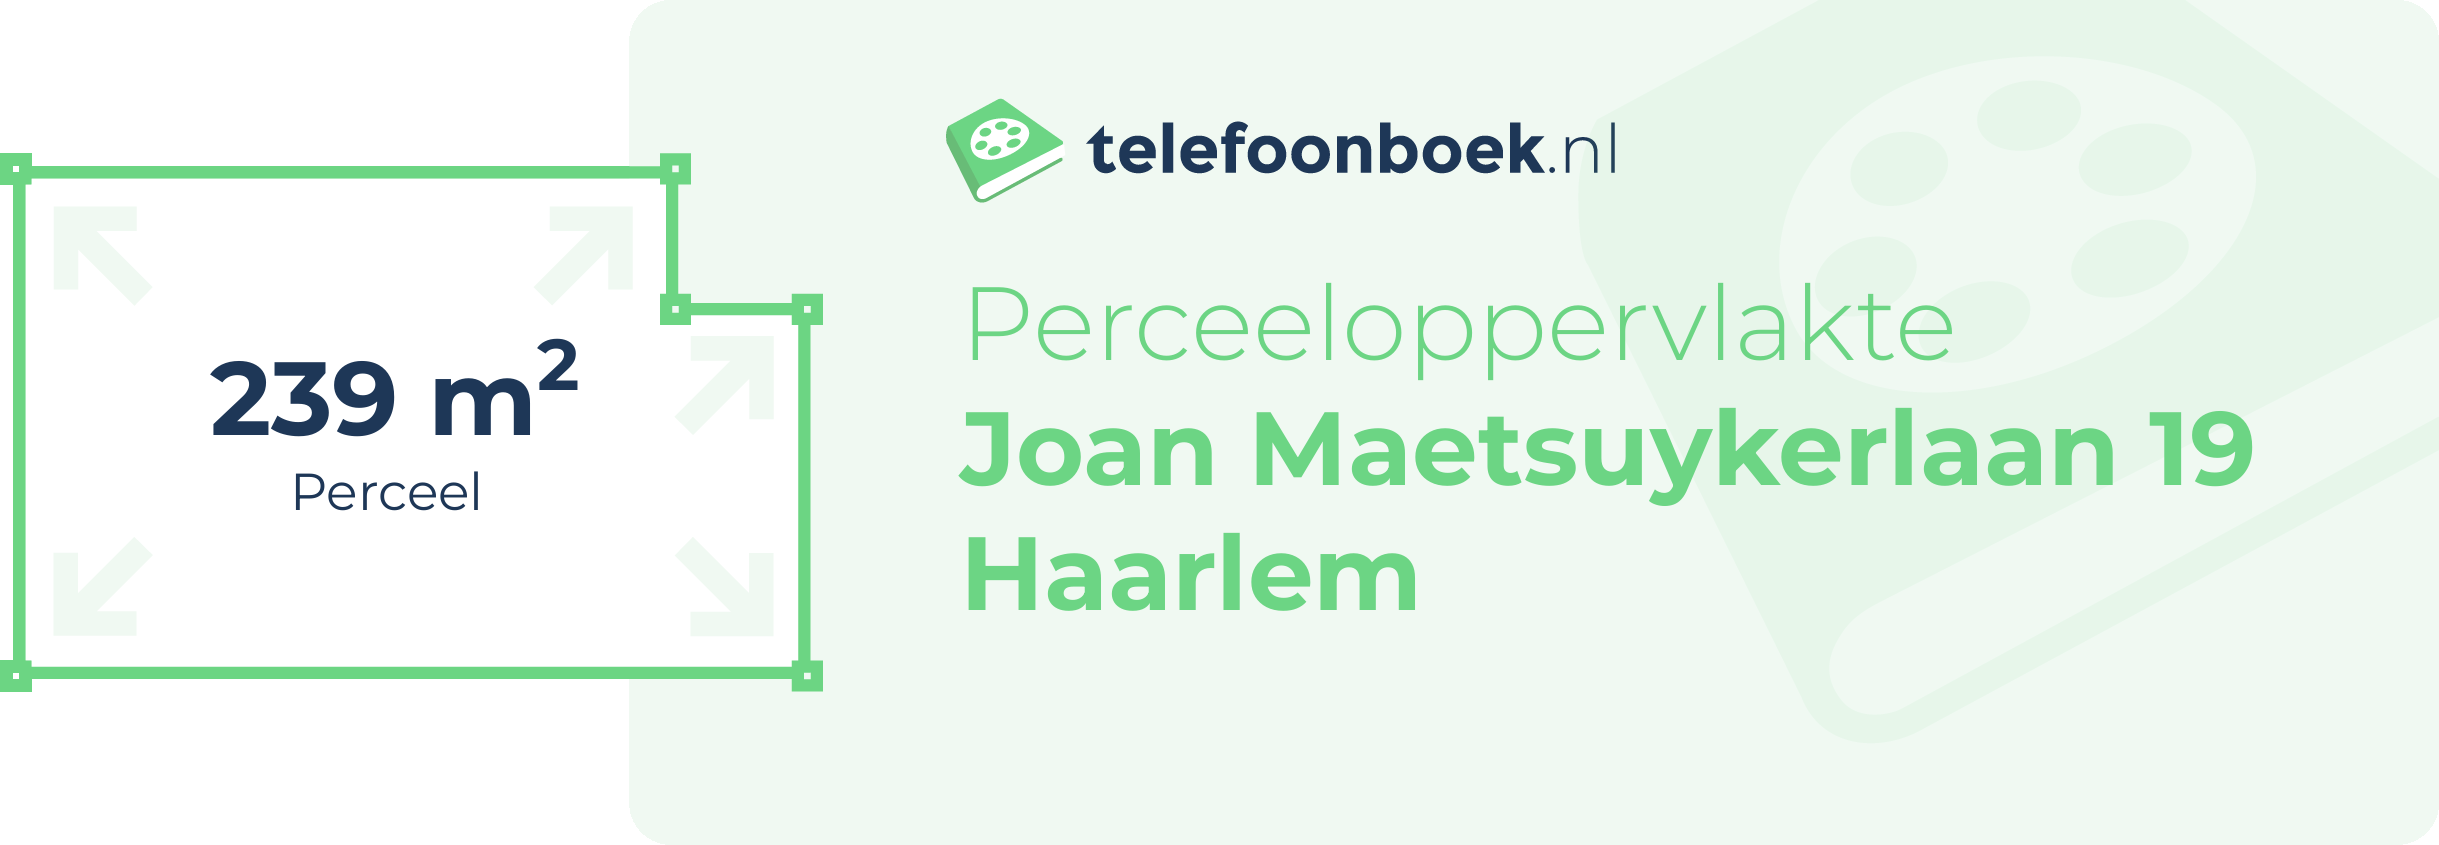 Perceeloppervlakte Joan Maetsuykerlaan 19 Haarlem